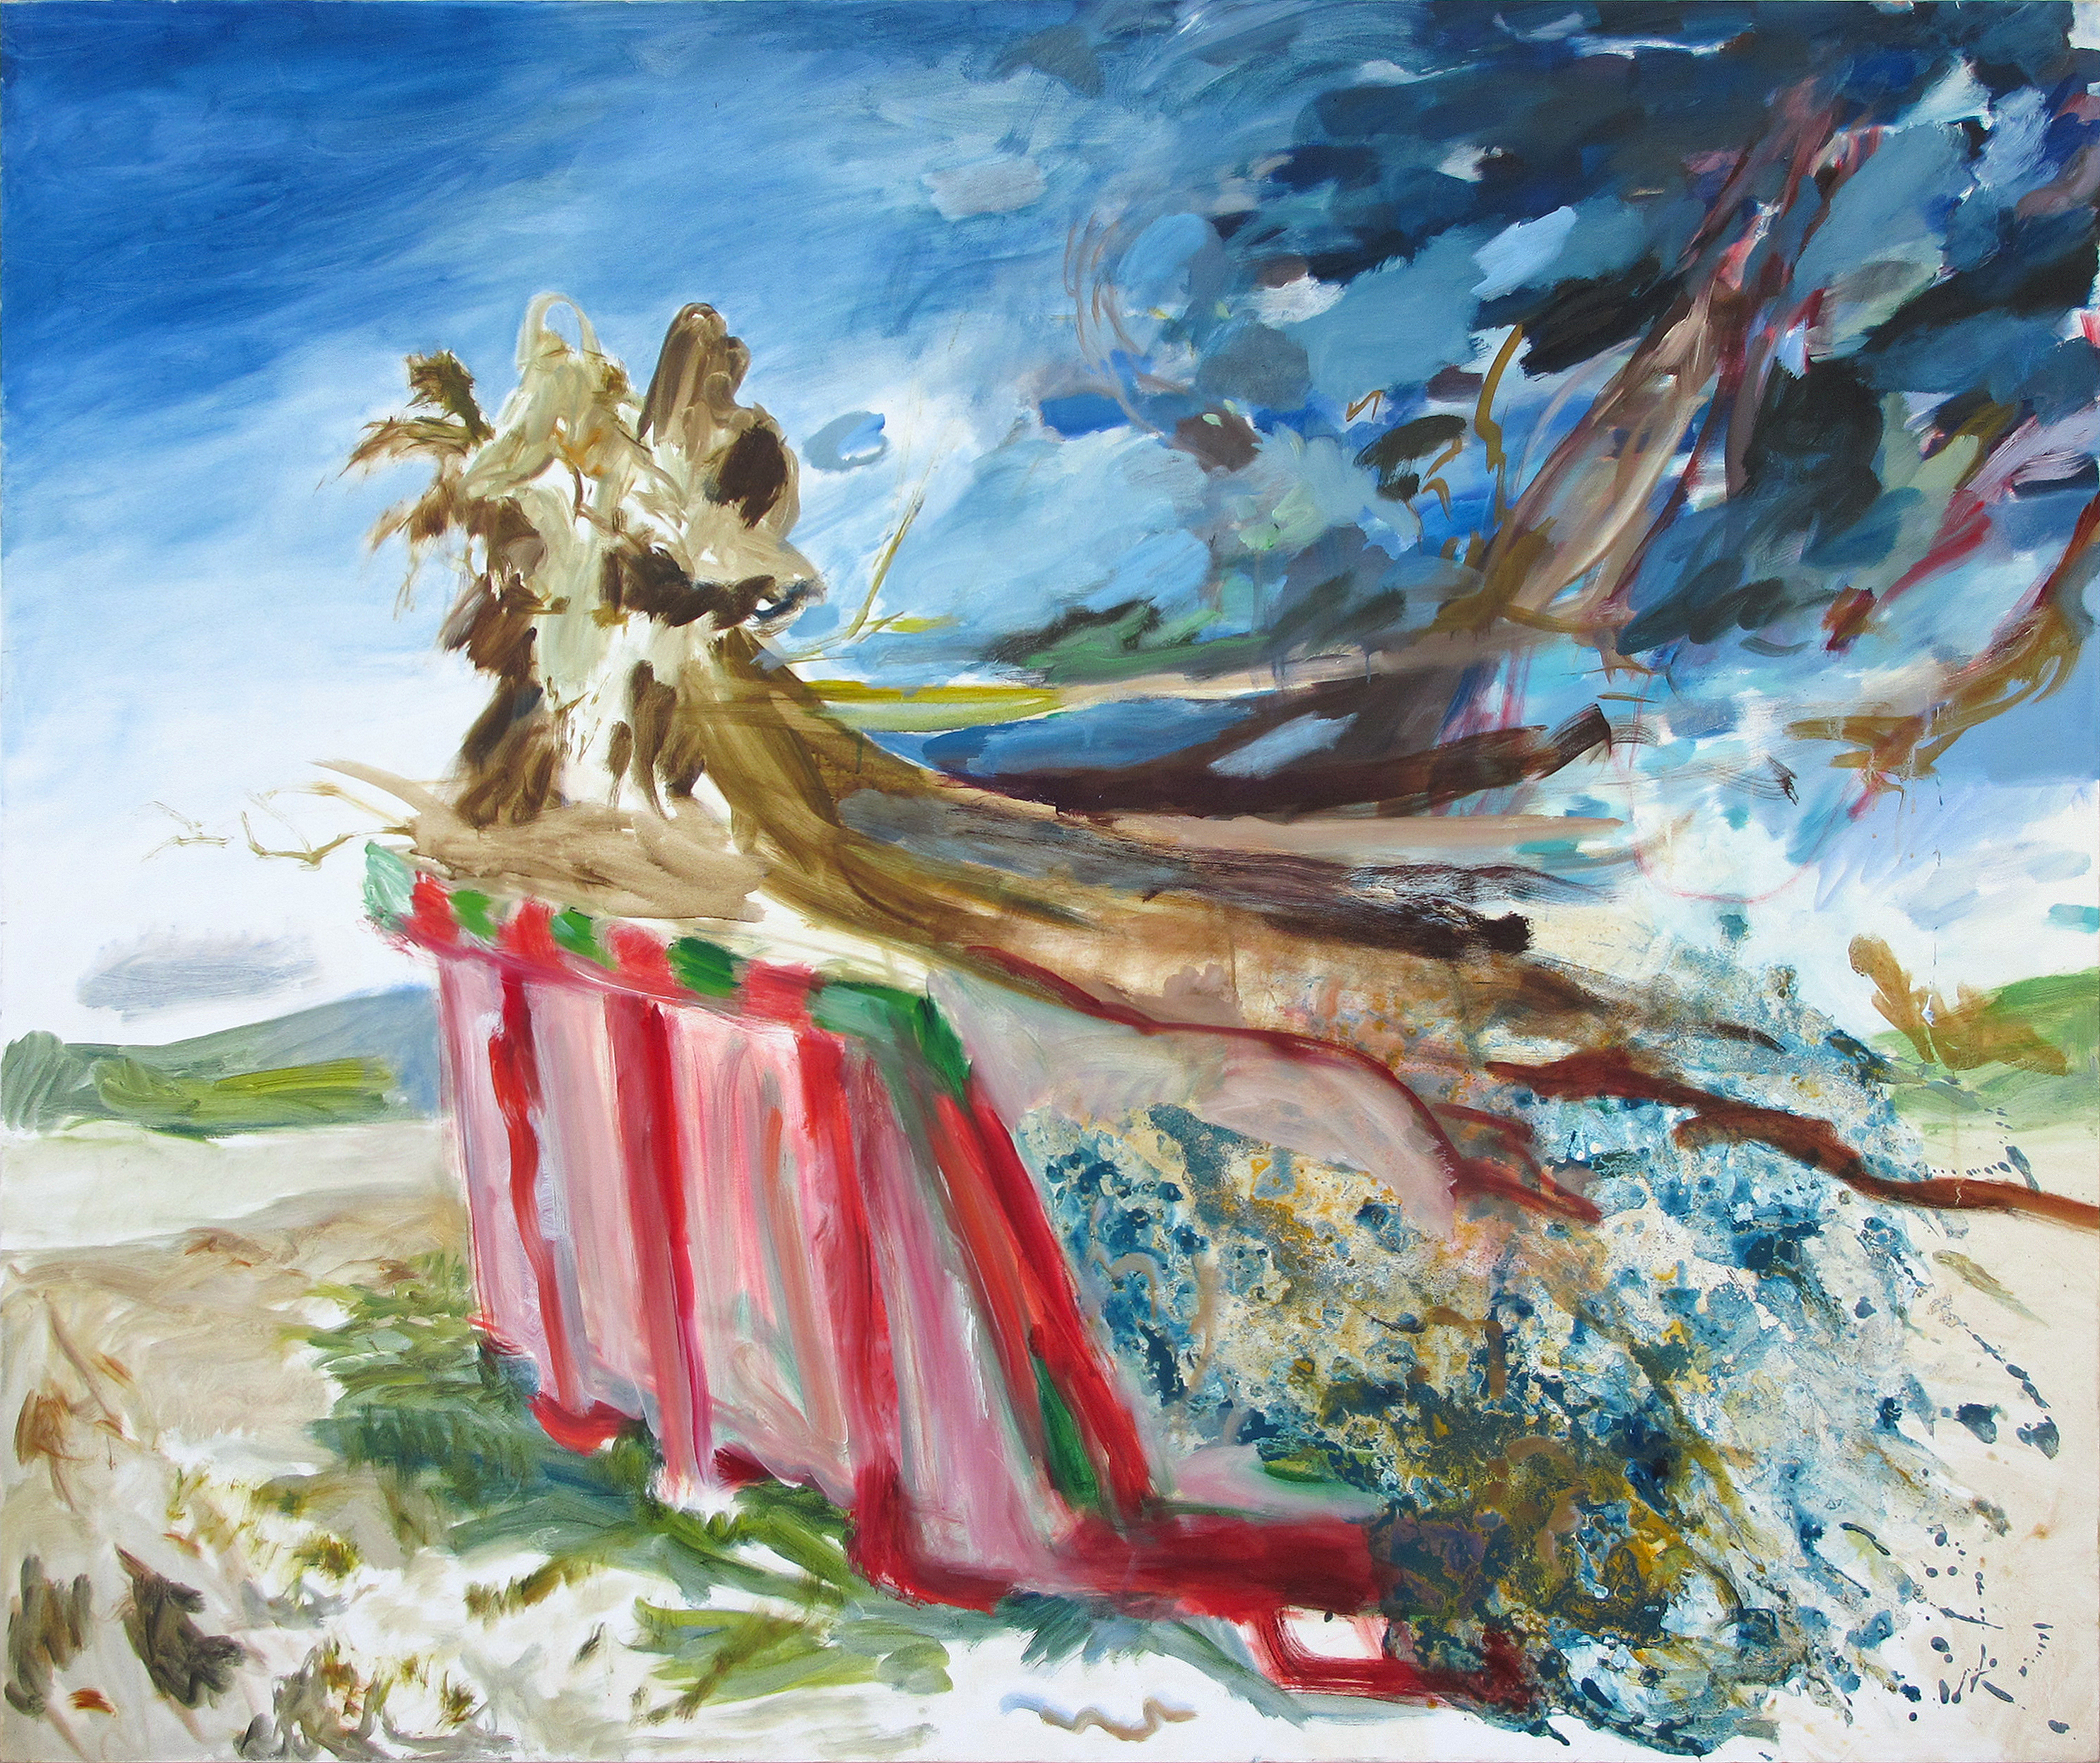 Suzanna Treumann | Daphne, dumped, Öl und Acylic auf leinwand, 150 x 180 cm 2008-2011